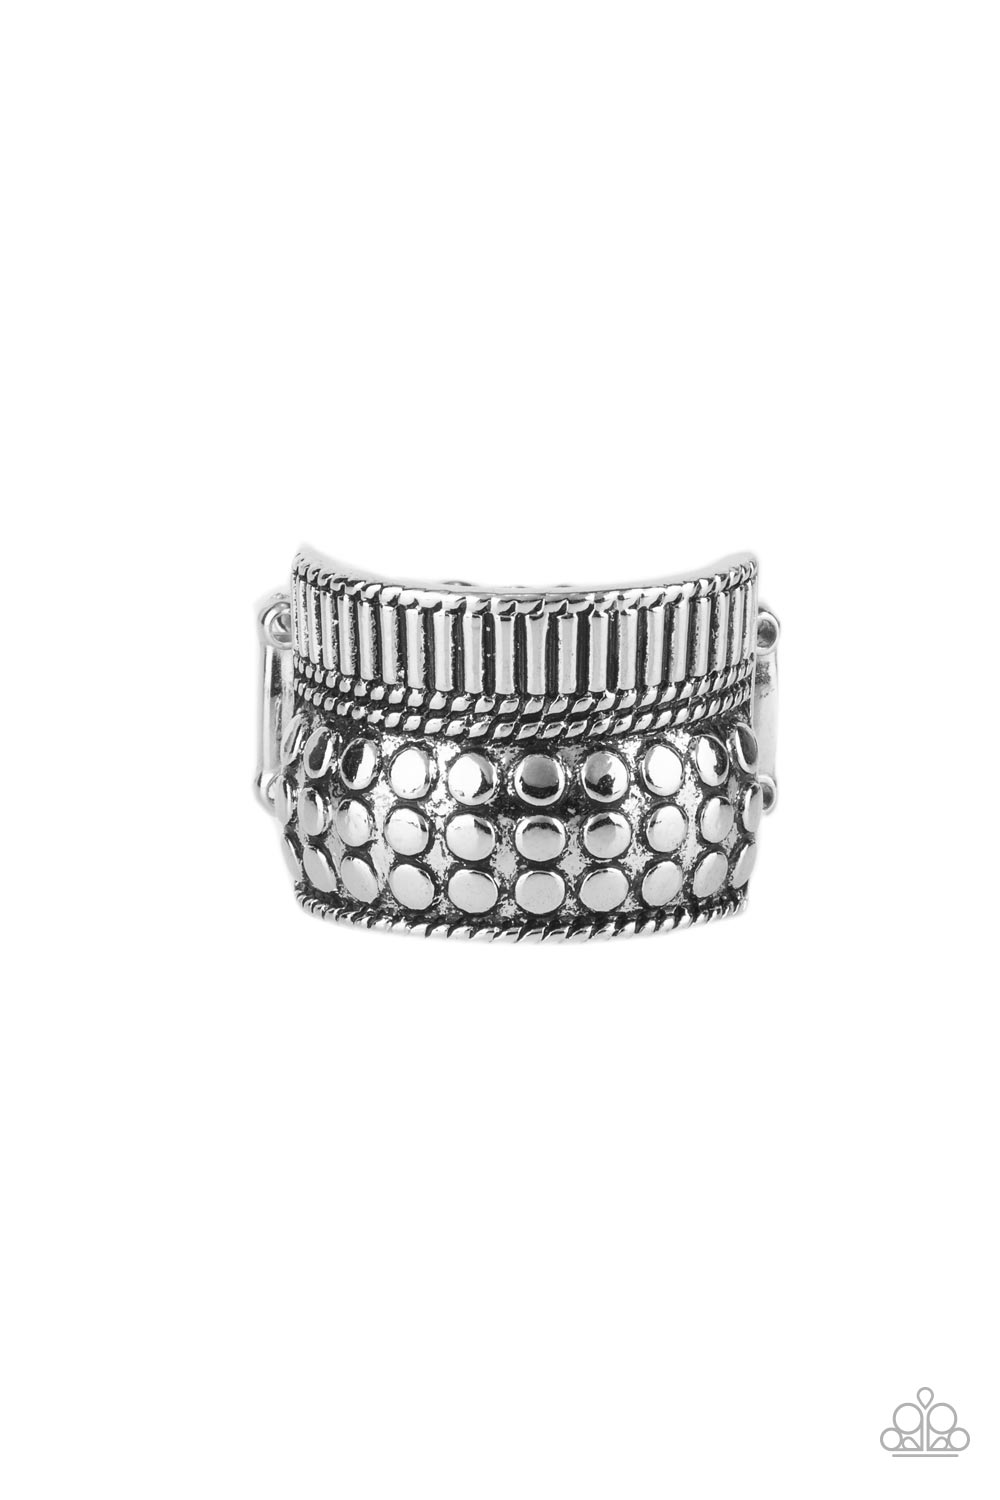 Tenacious Texture - silver - Paparazzi ring